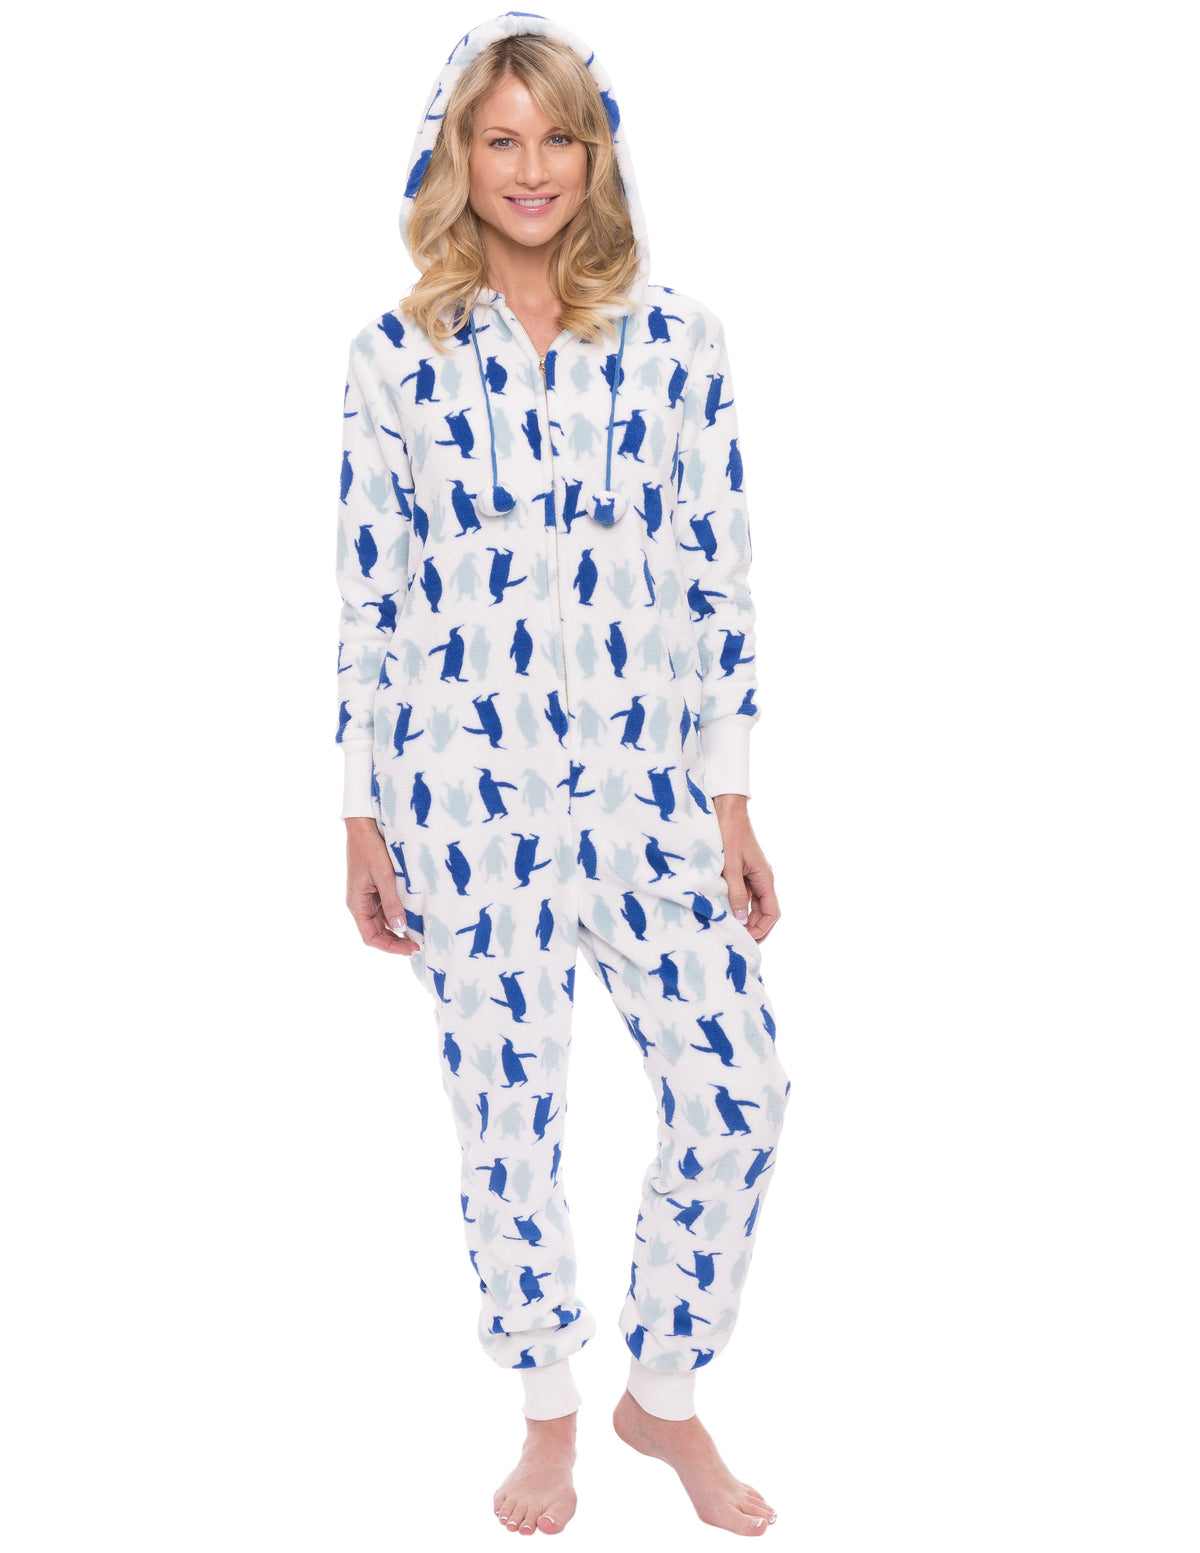 Women's Premium Coral Fleece Plush Hooded Onesie Pajama - Penguin Mania - White/Blue